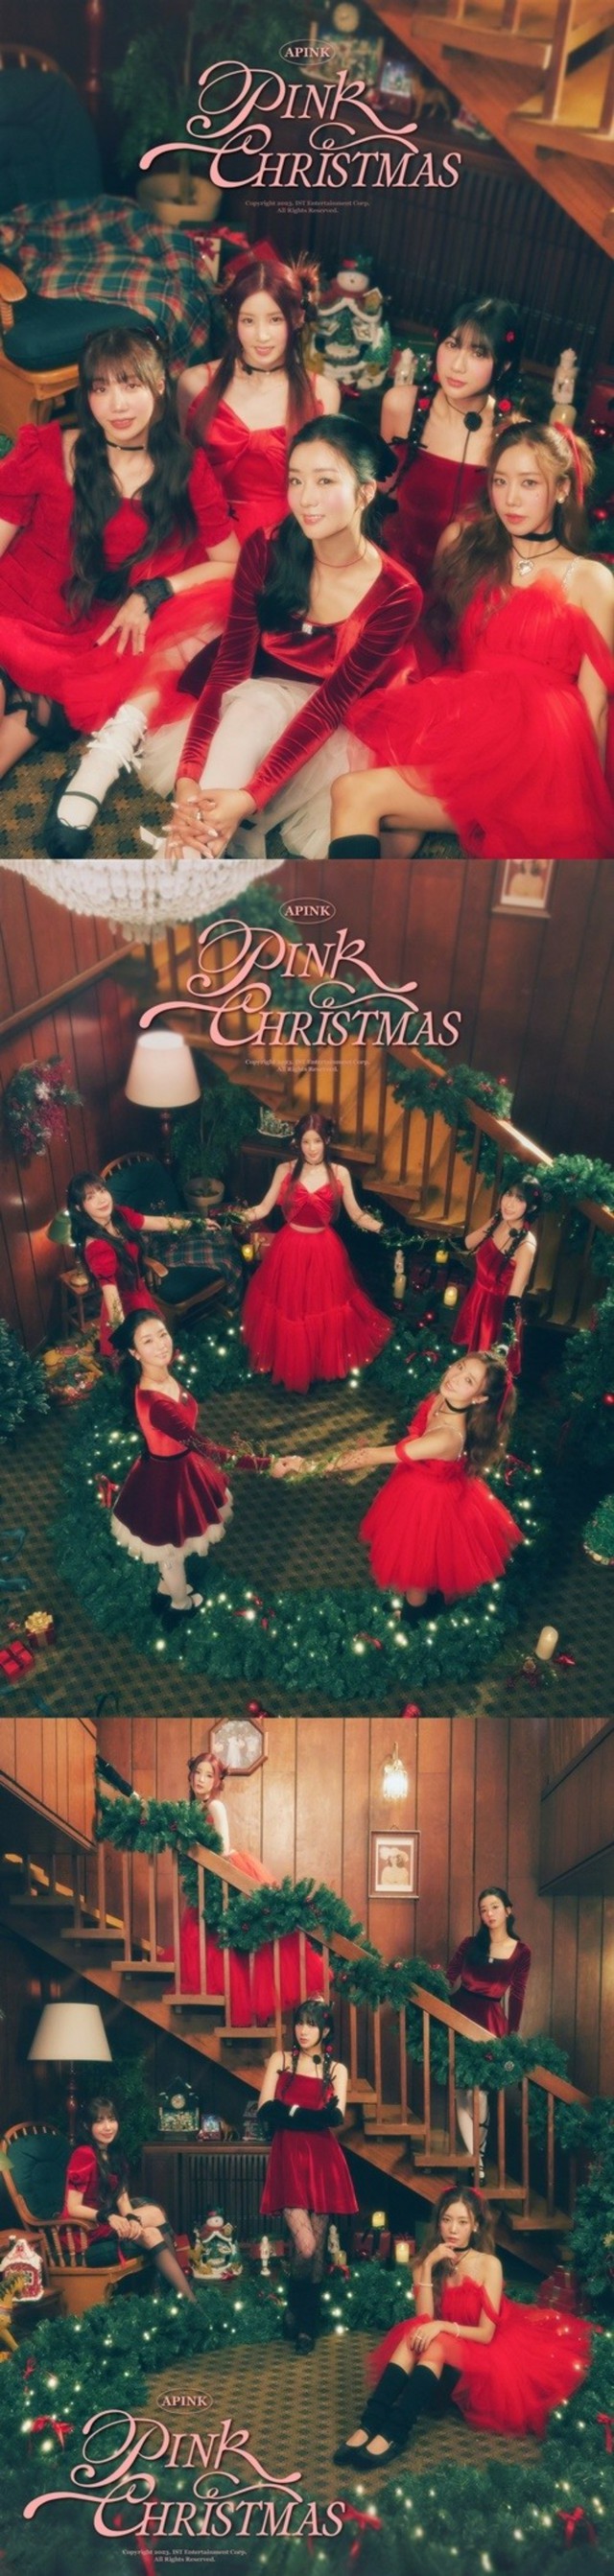 「Apink」、11日に初のキャロルソング「PINK CHRISTMAS」発表…和気あいあいとした団体フォト公開